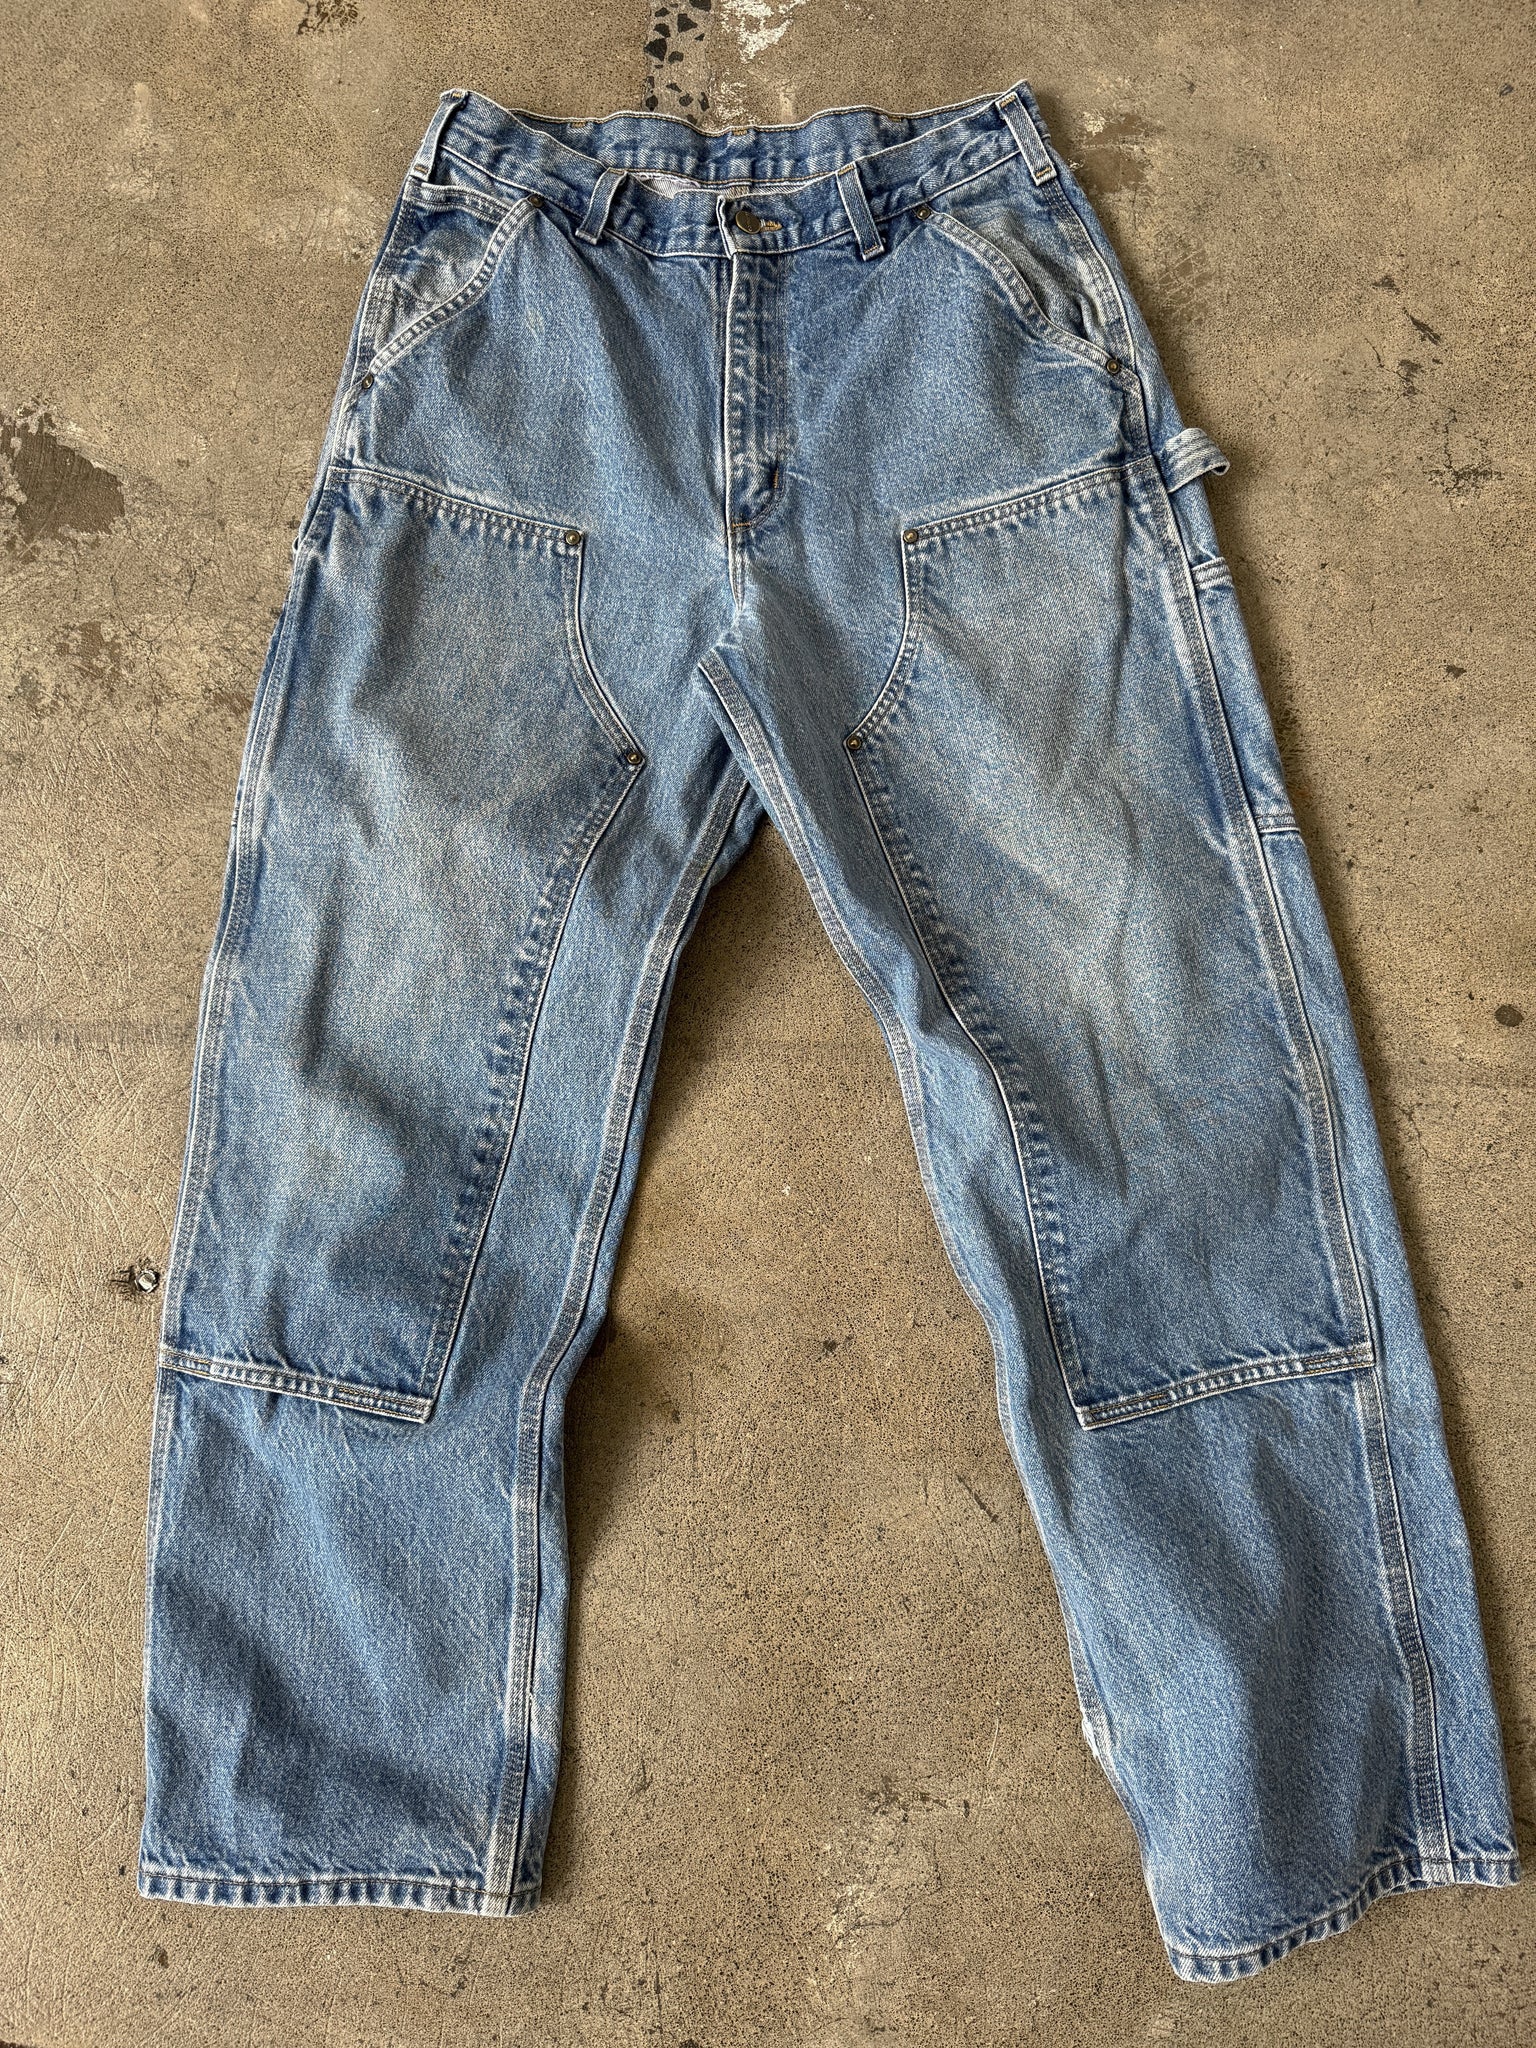 Vintage Carhartt Double Knee Jeans (32)